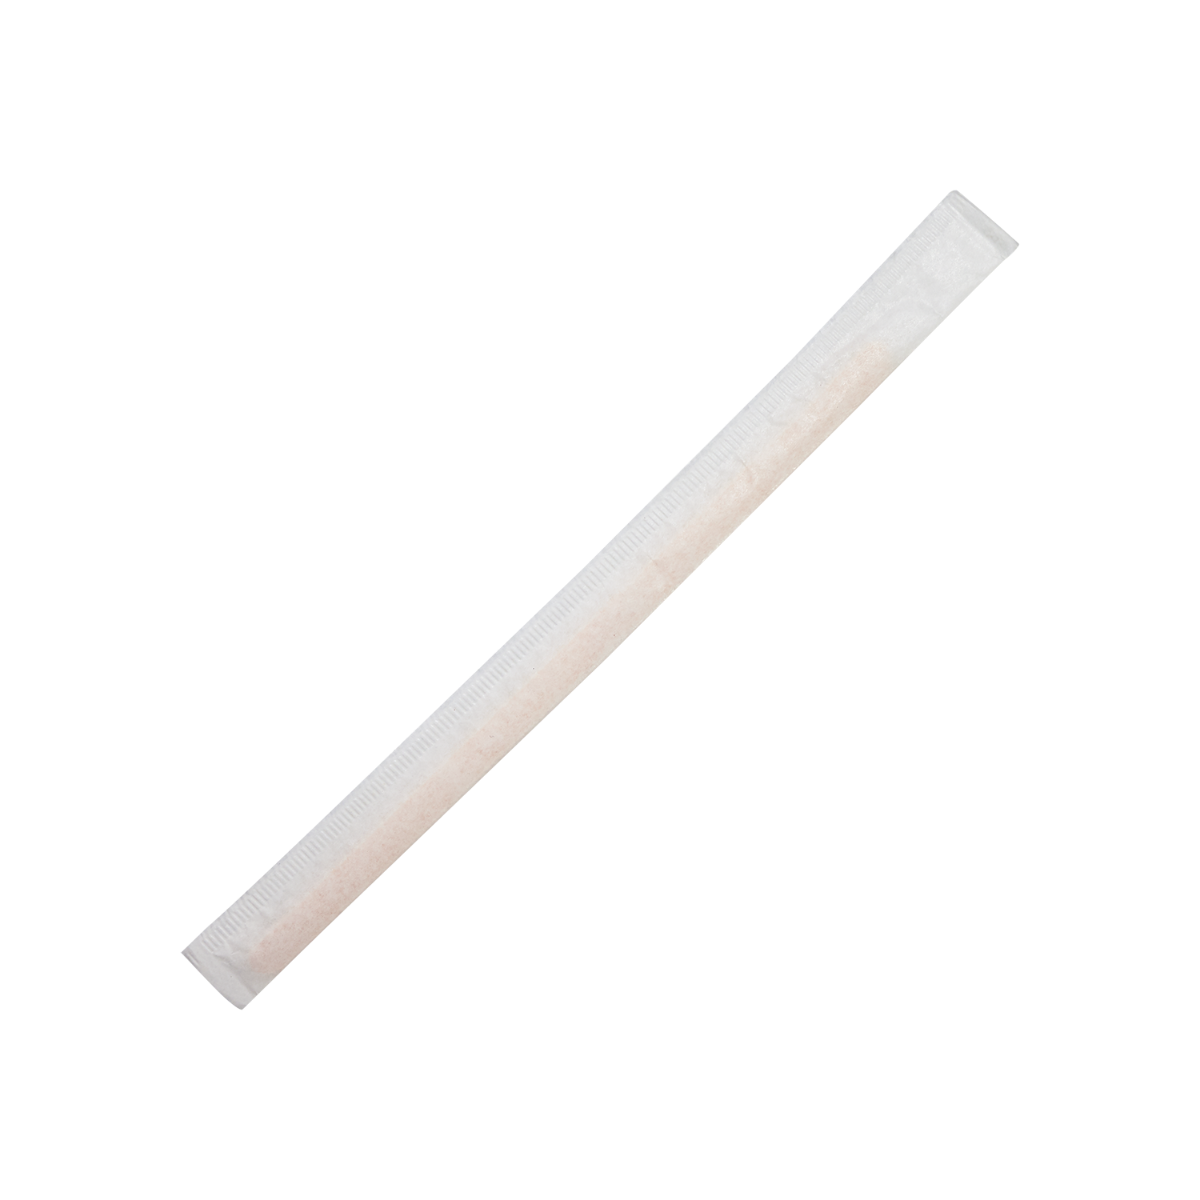 Wrapped Wood Stirrers - Karat Earth 5.5 Wooden Stir Sticks (Paper Wra